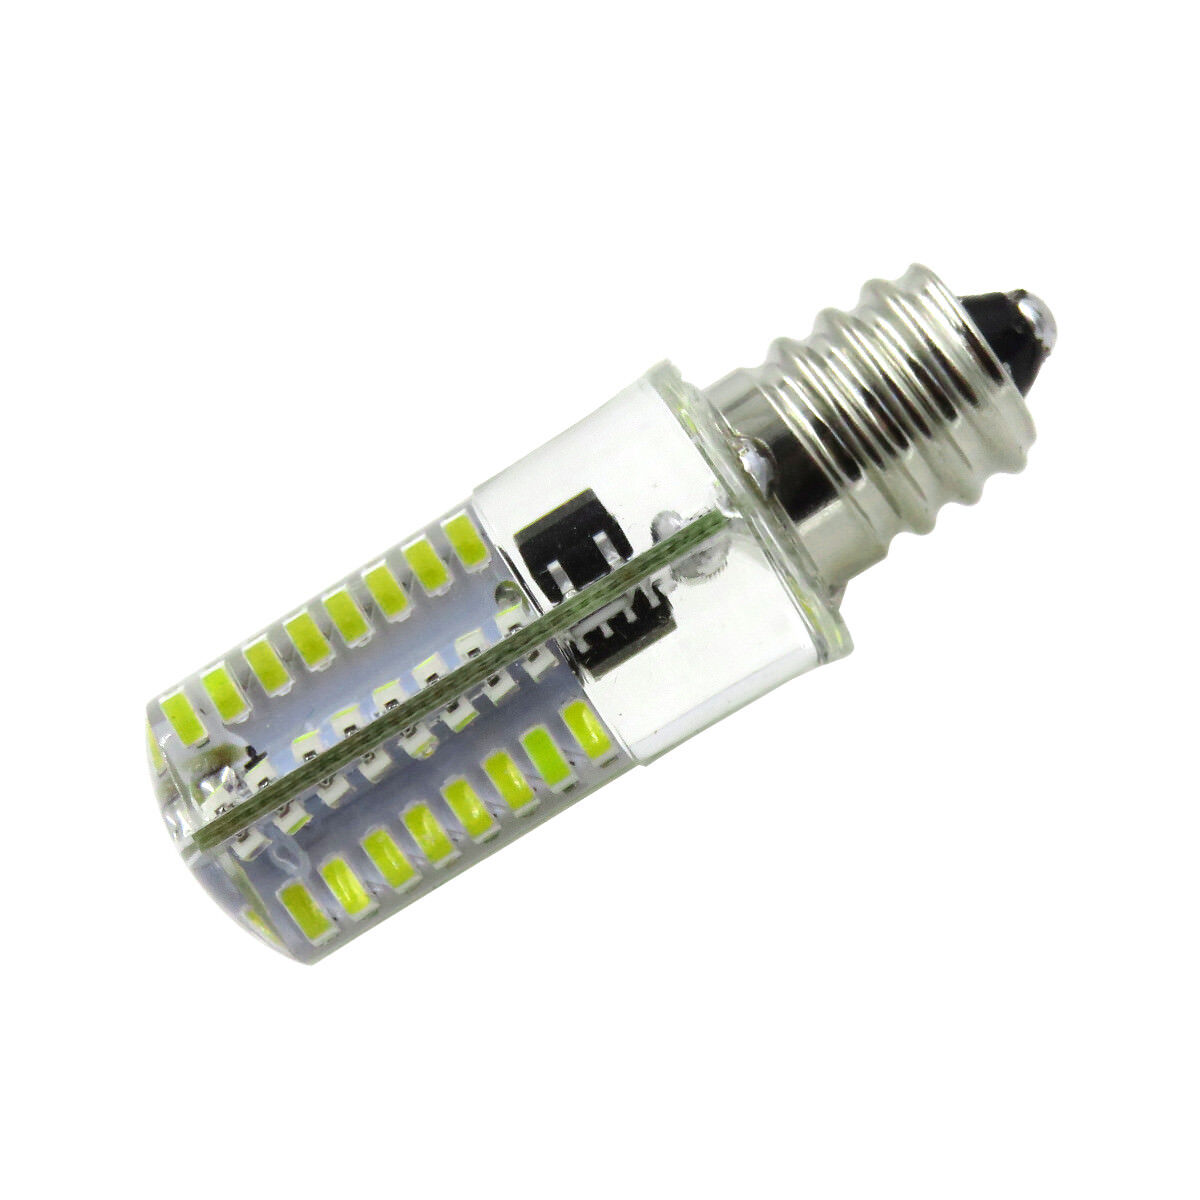 10pcs E12 Candelabra C7 64-3014 SMD LED Light Lamp Bulb Fit PQ1500S White 110V  Unbranded Does not apply - фотография #4